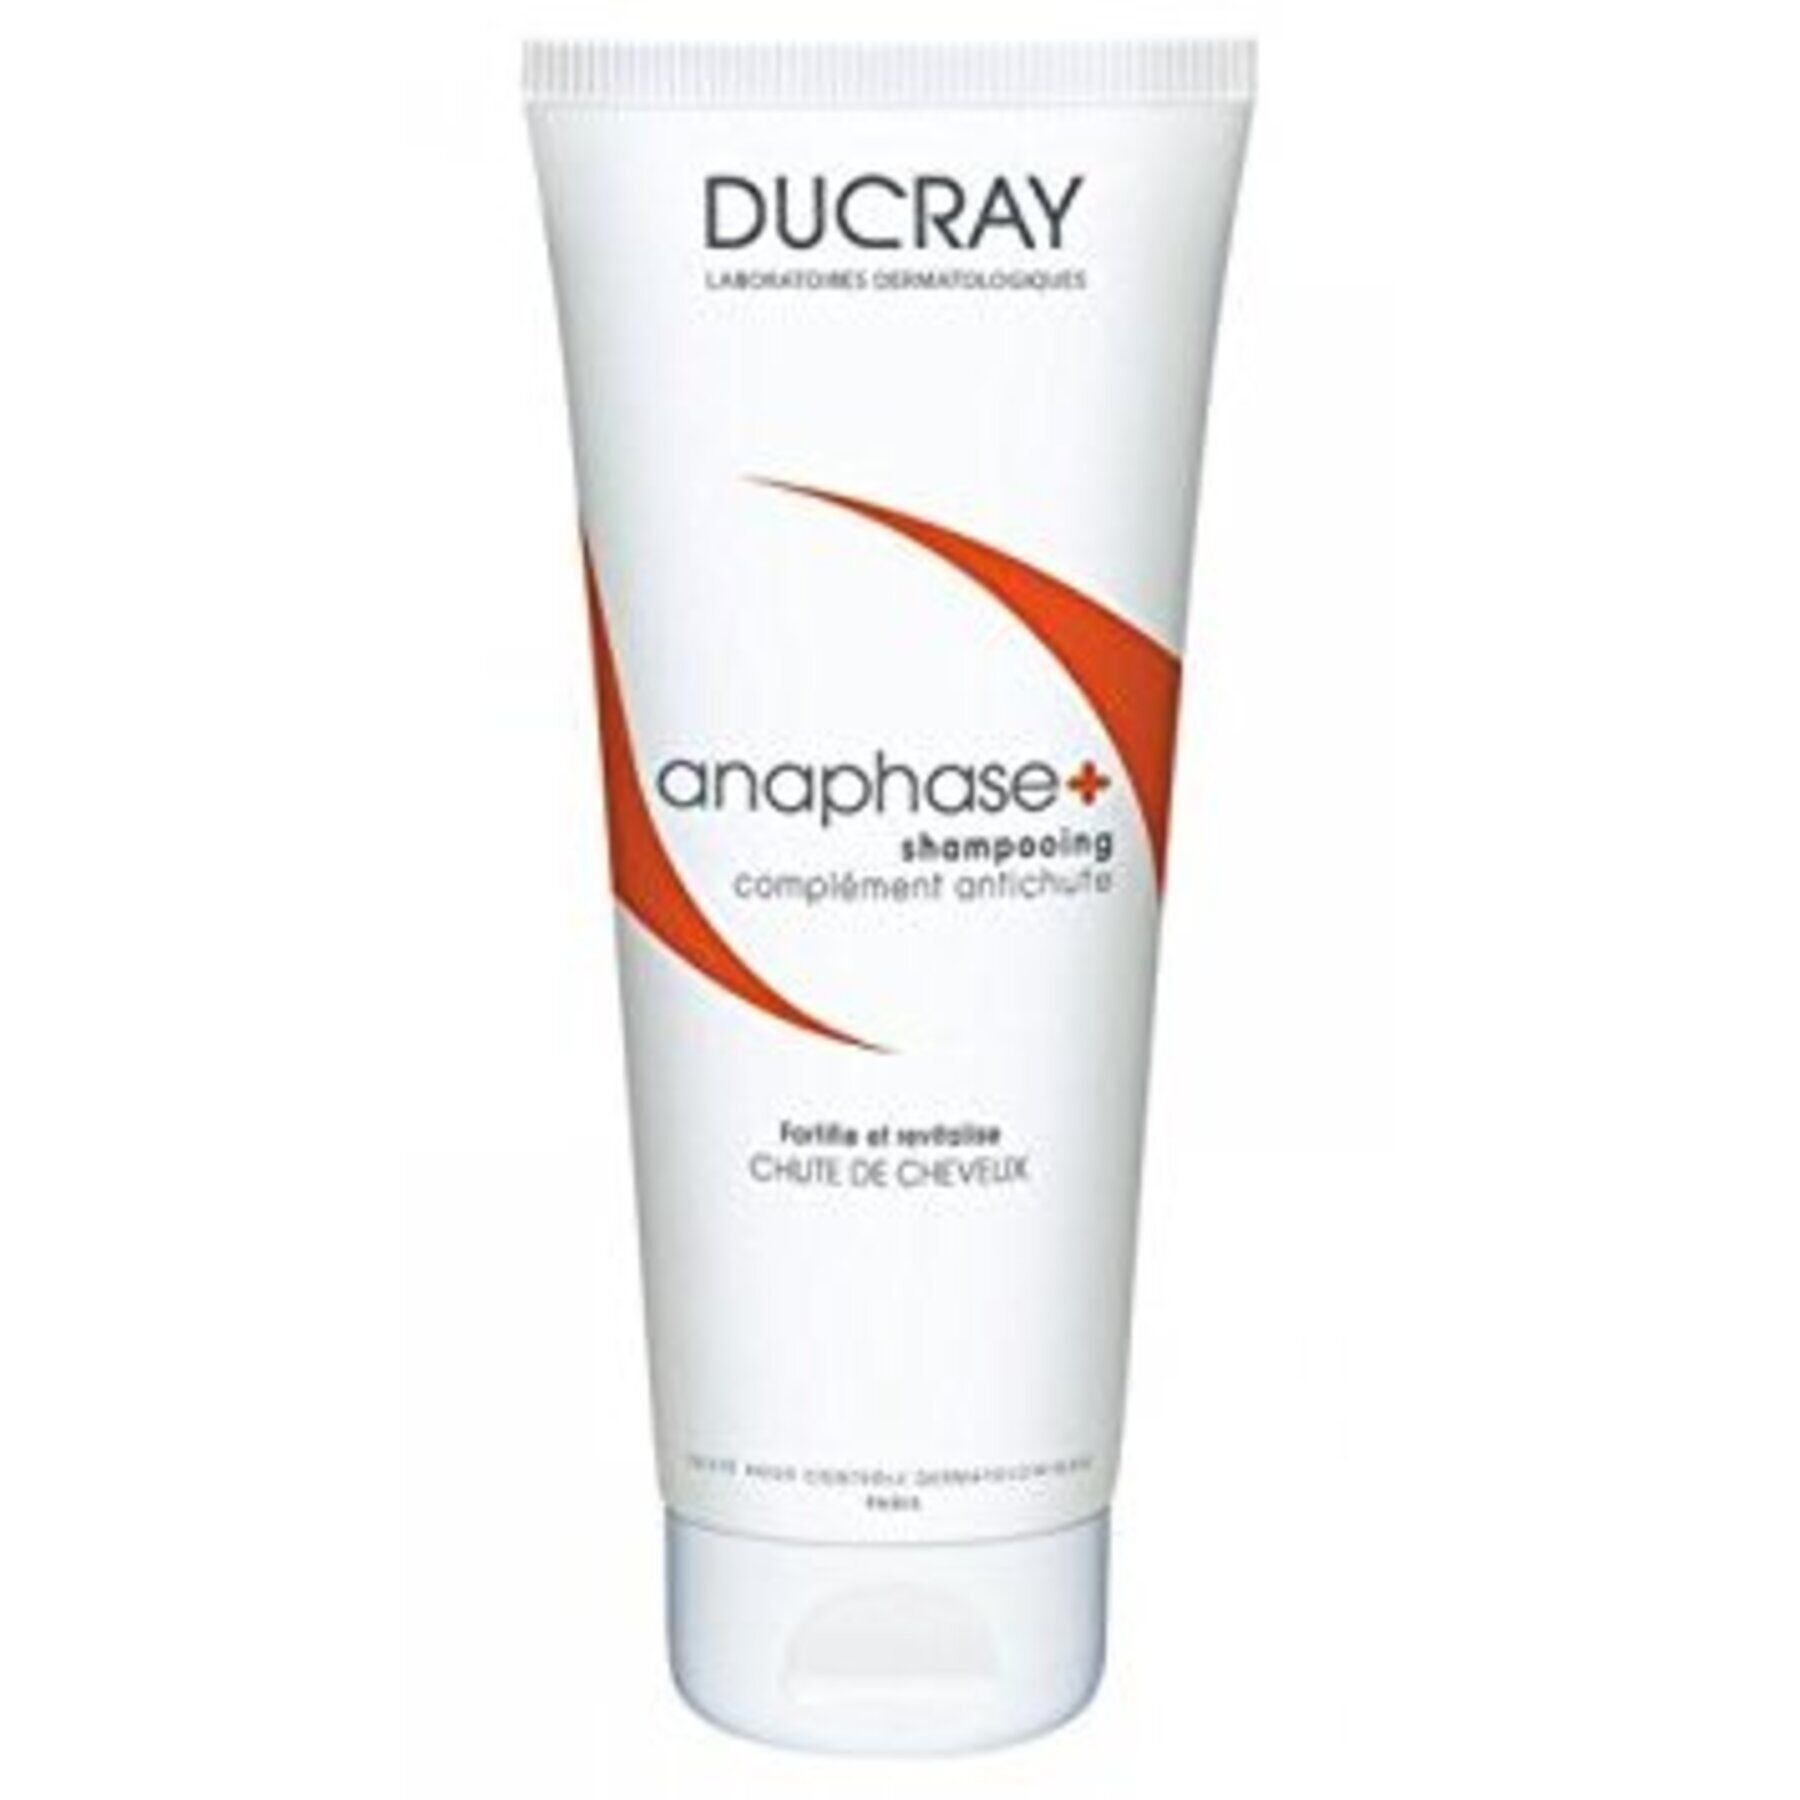 DUCRAY (Pierre Fabre It. SpA) Anaphase + shampoo 200 ml